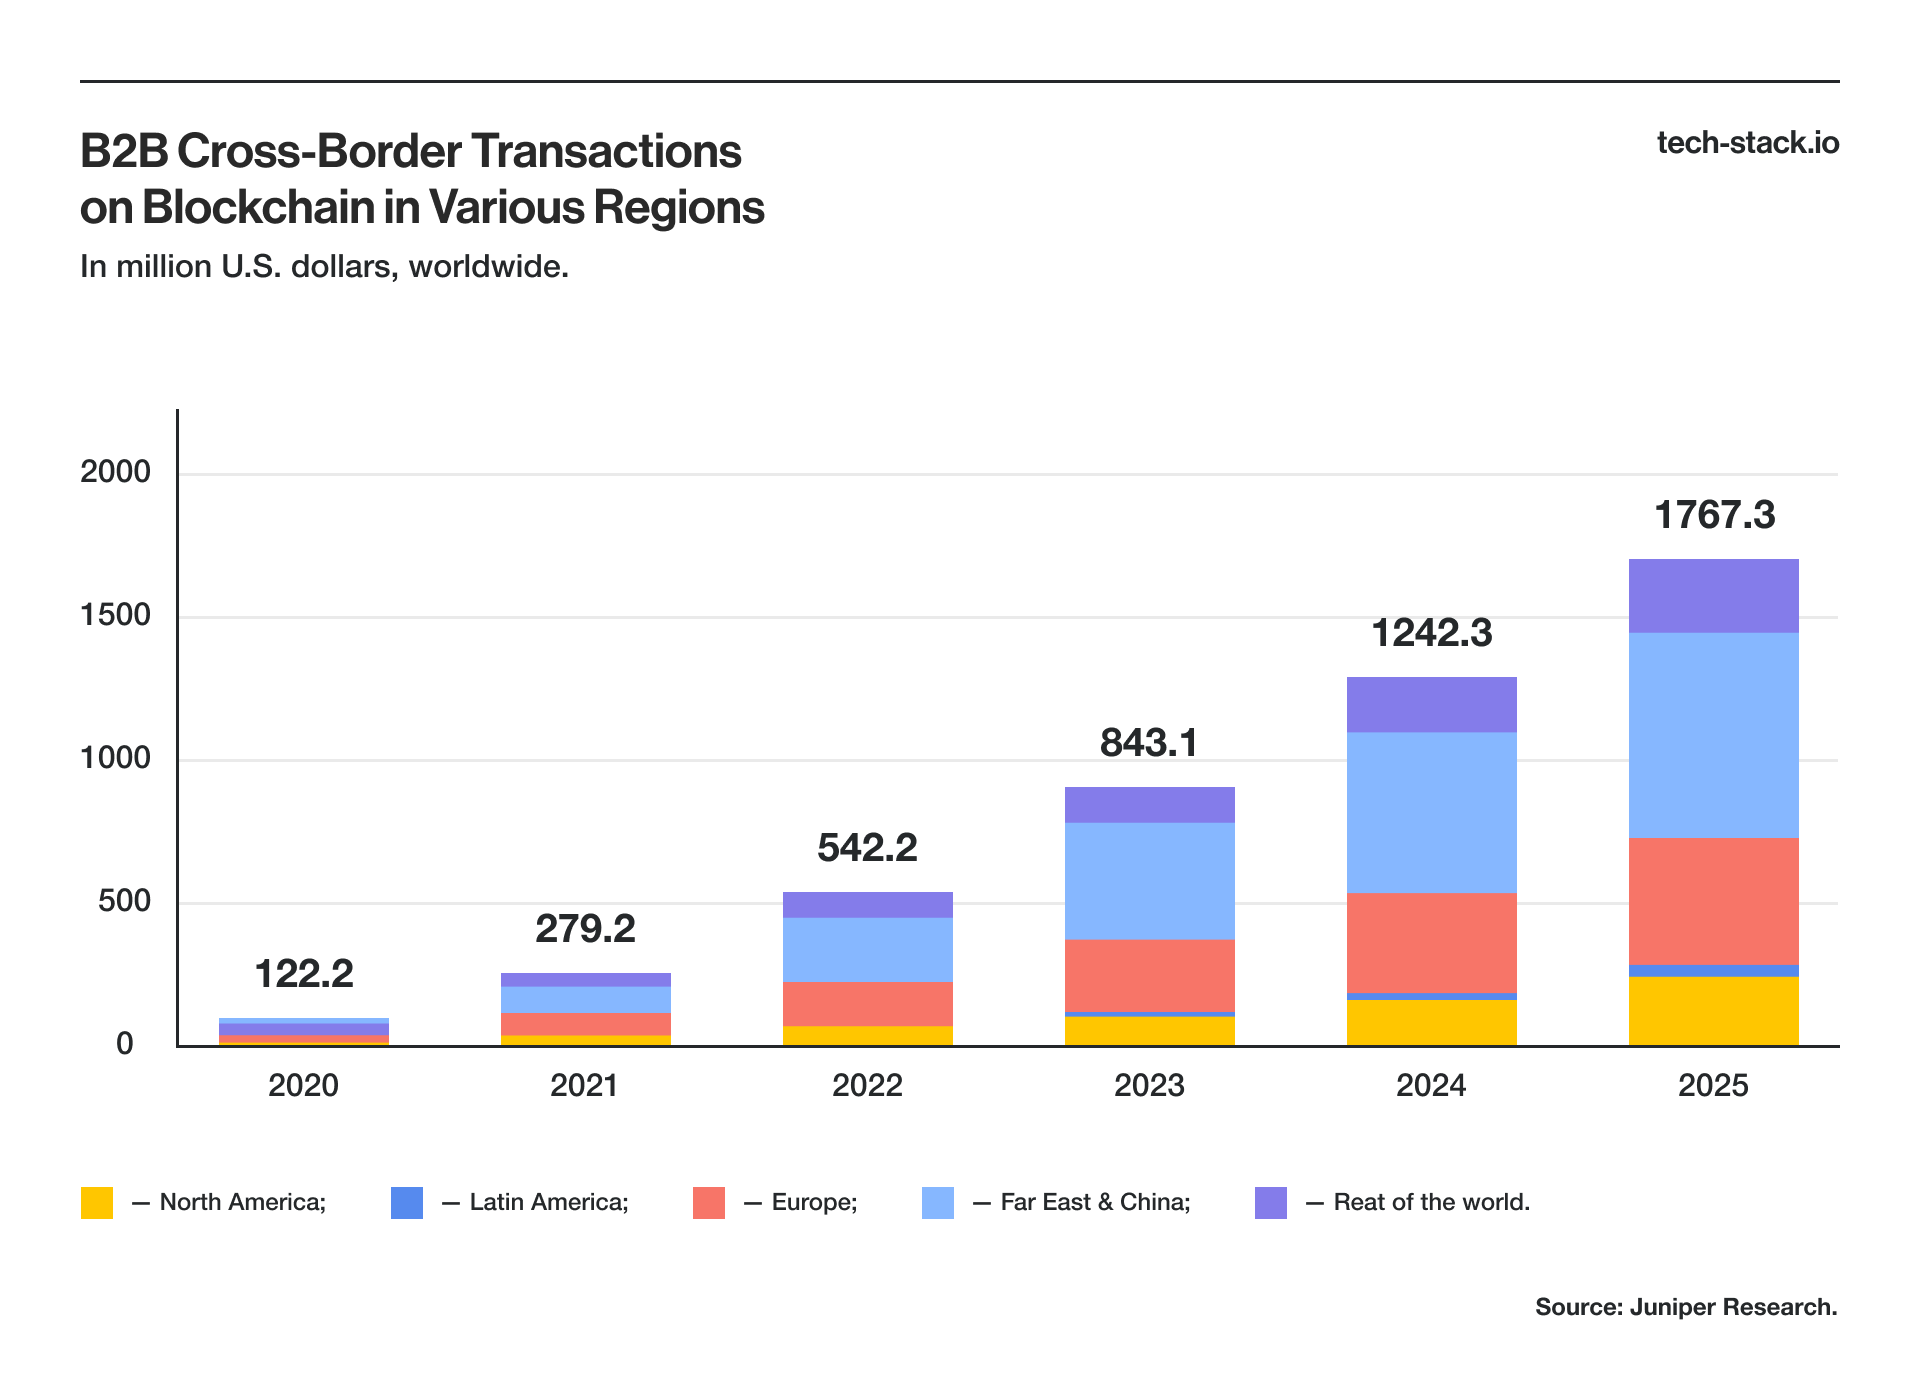 B2B Cross-Border Transactions on Blockchain in Various Regions